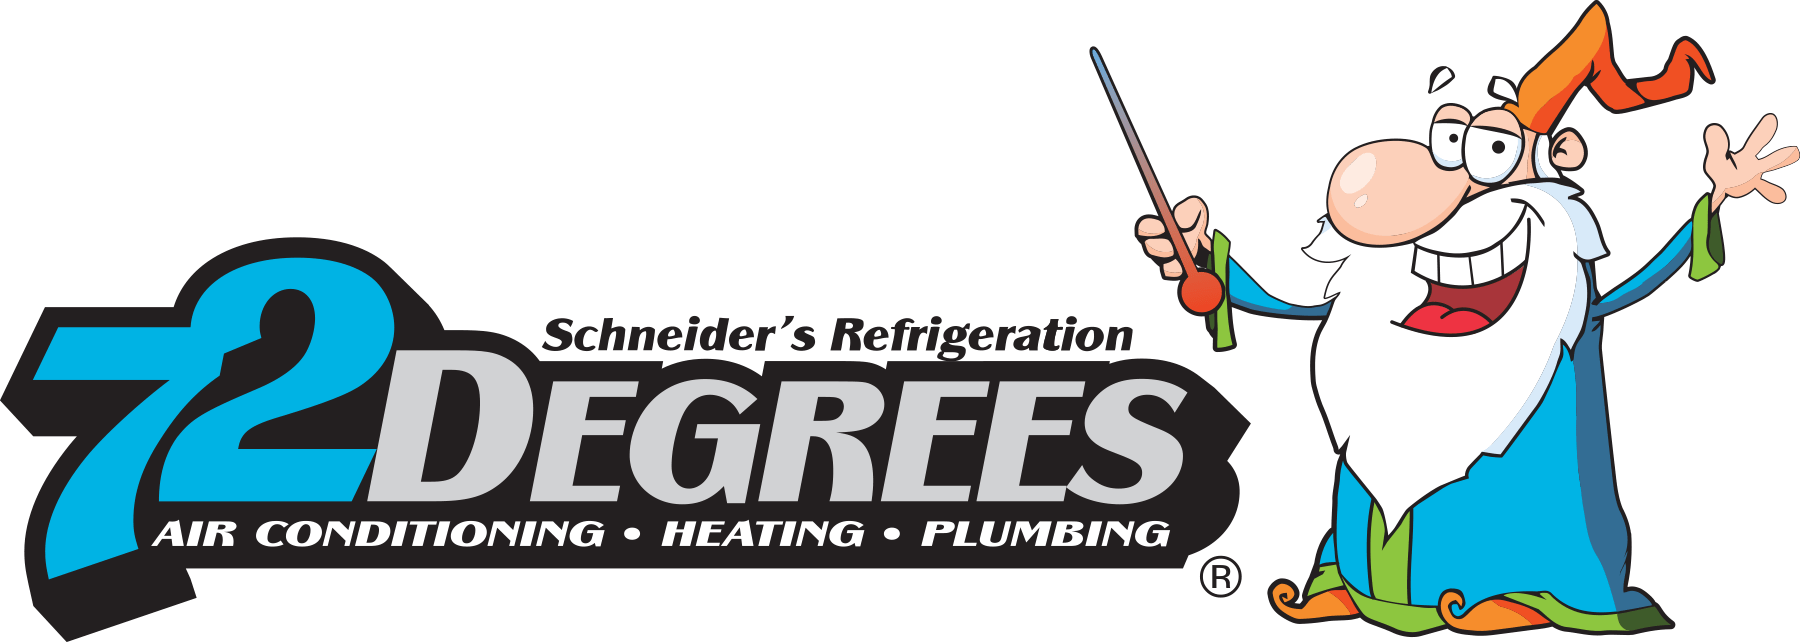 Air Conditioner Repair Service Boerne TX | Schneider's 72 Degrees Air Conditioning & Heating.